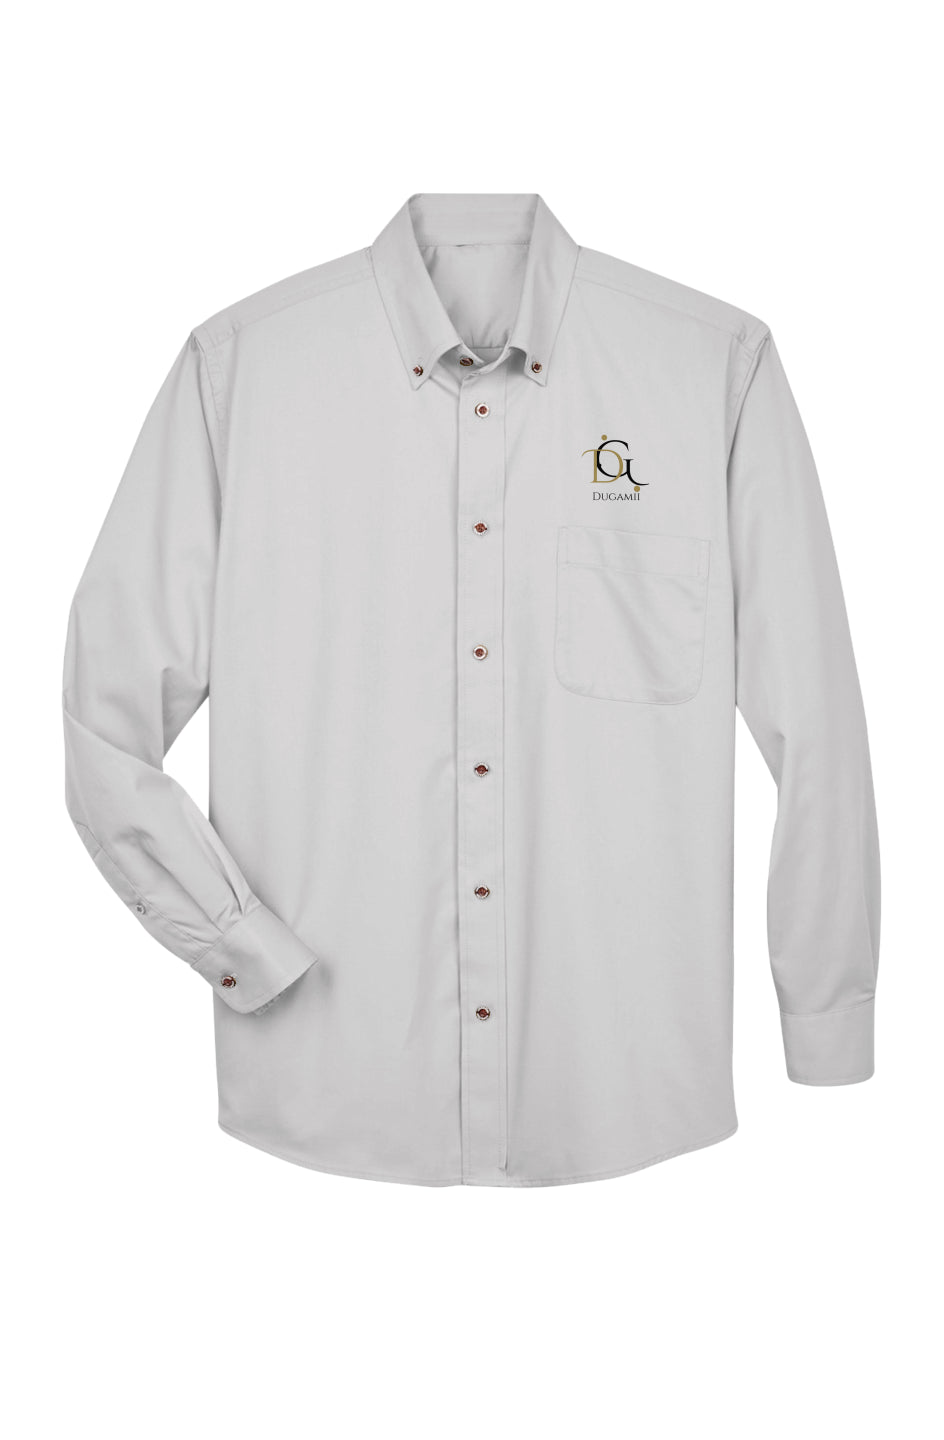 Men's DuGamii Long-Sleeve Button Up Shirt